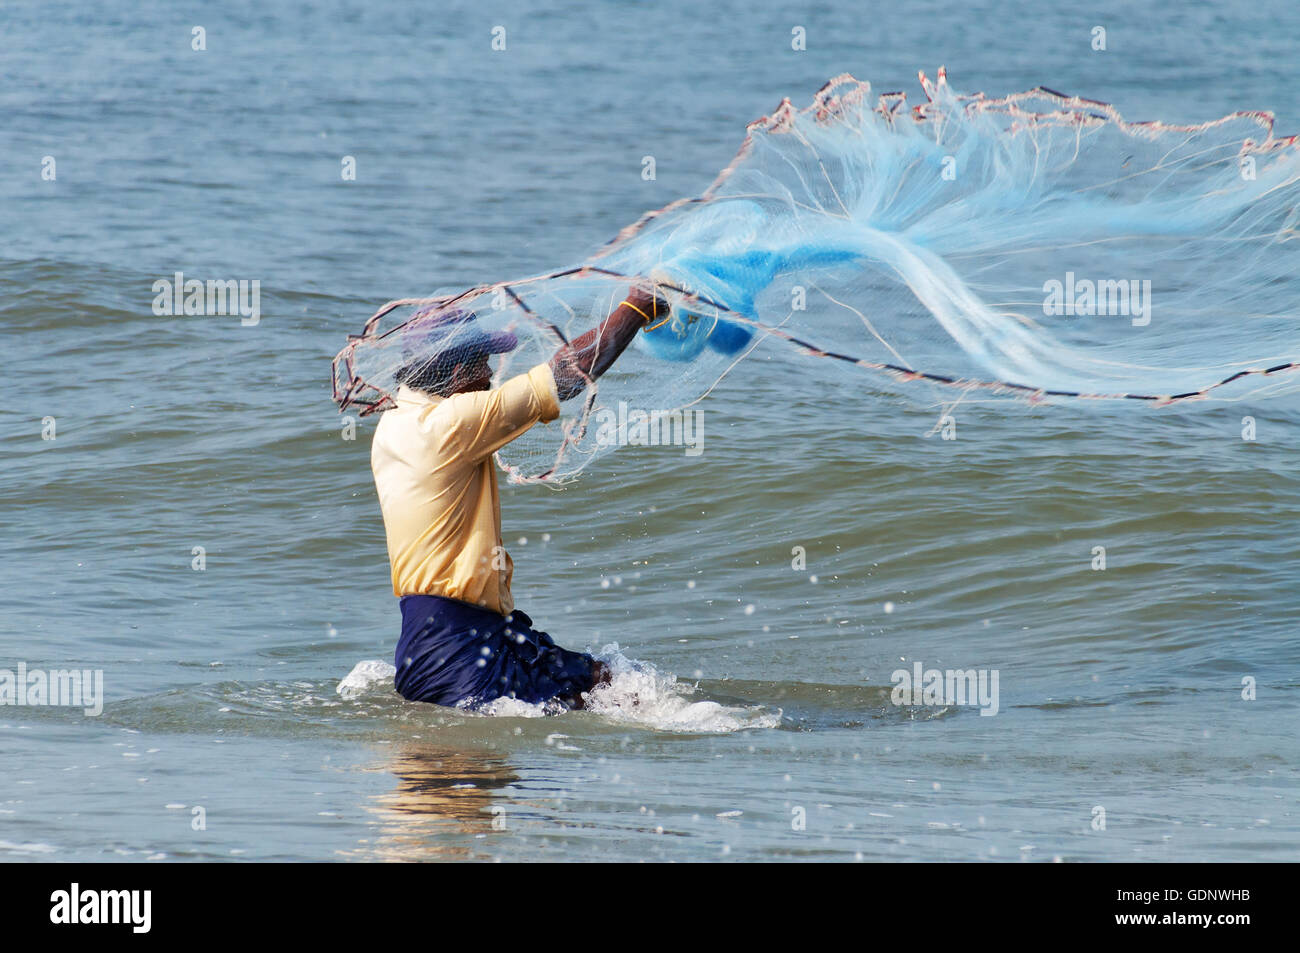 https://c8.alamy.com/comp/GDNWHB/unidentified-indian-fisherman-catch-fish-by-throwing-net-GDNWHB.jpg